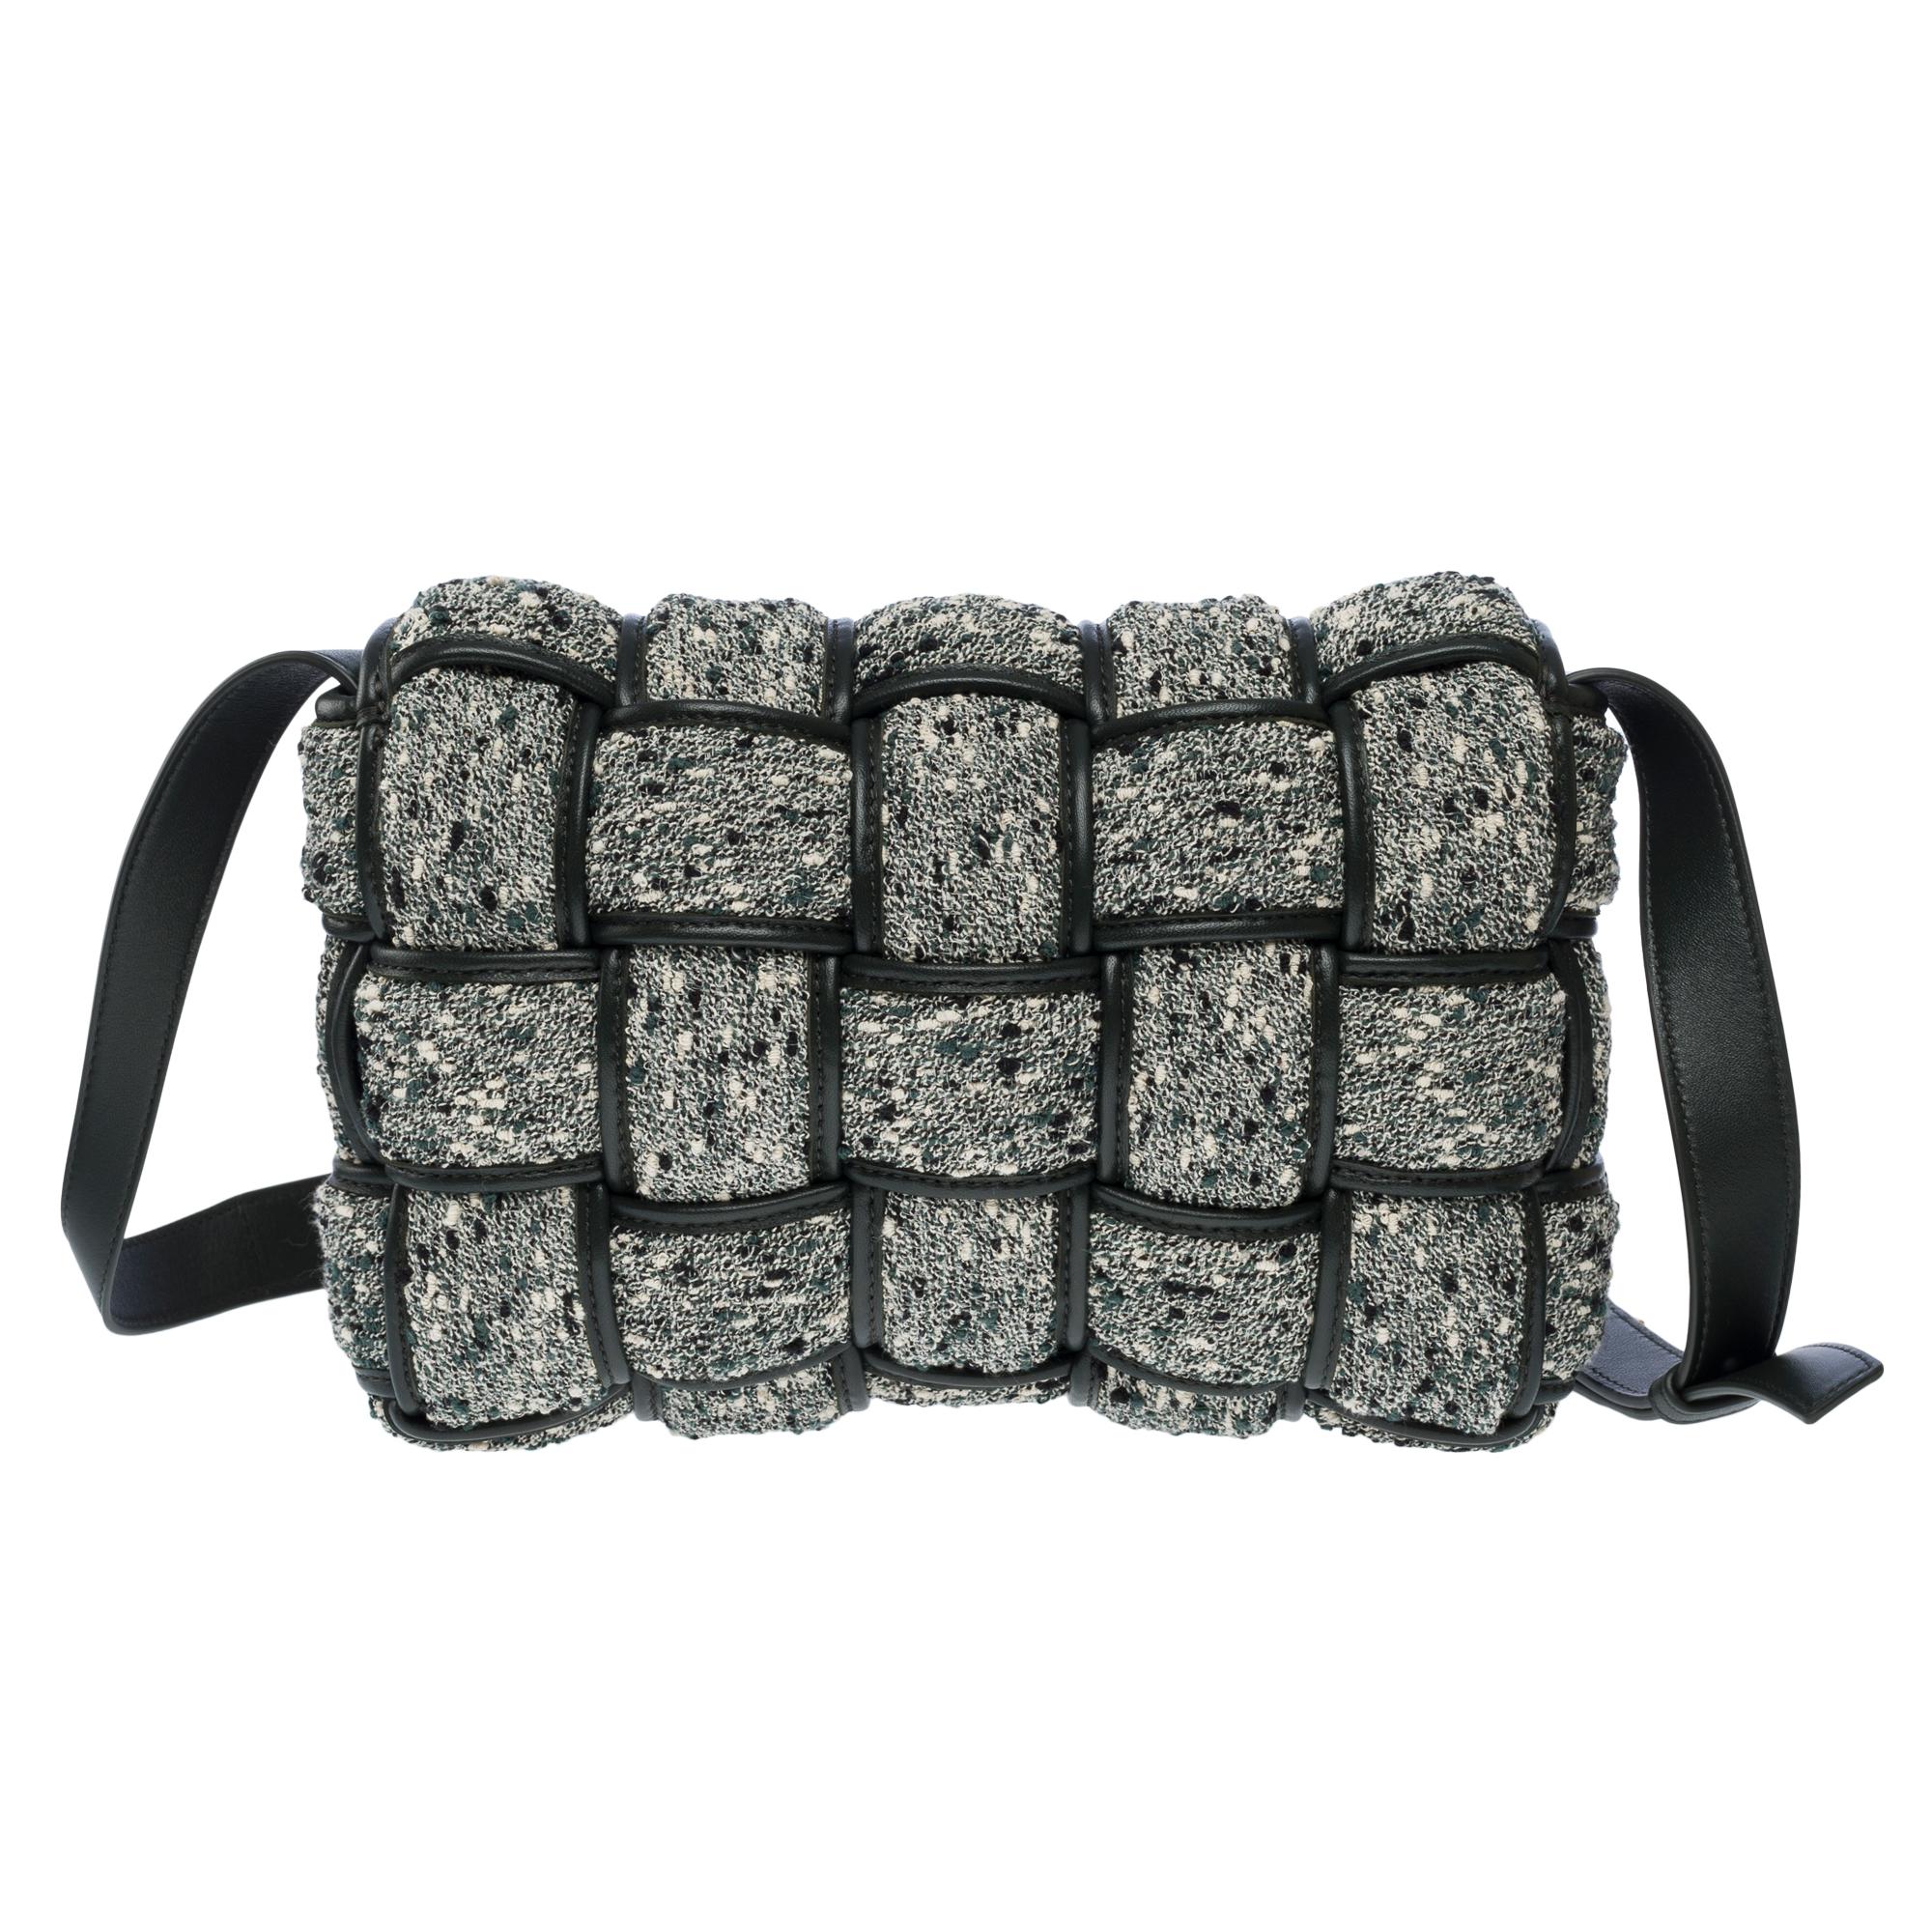 Women's or Men's Bottega Veneta Cassette 25 shoulder bag in grey and green Tweed, GHW For Sale